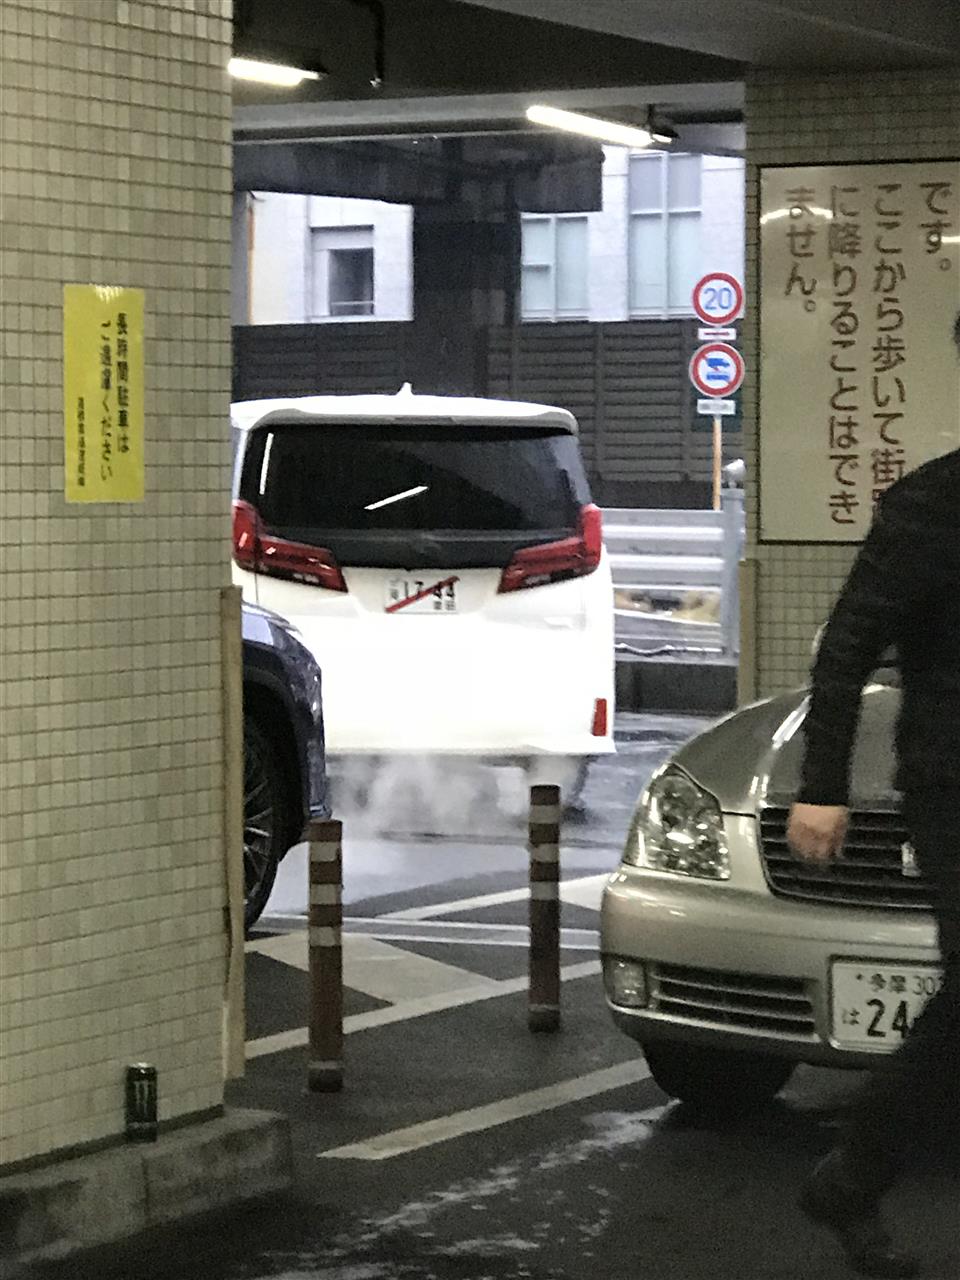 Berita, Toyota Alphard spyshot belakang: Toyota Alphard Varian Terbaru Tertangkap Kamera Lagi